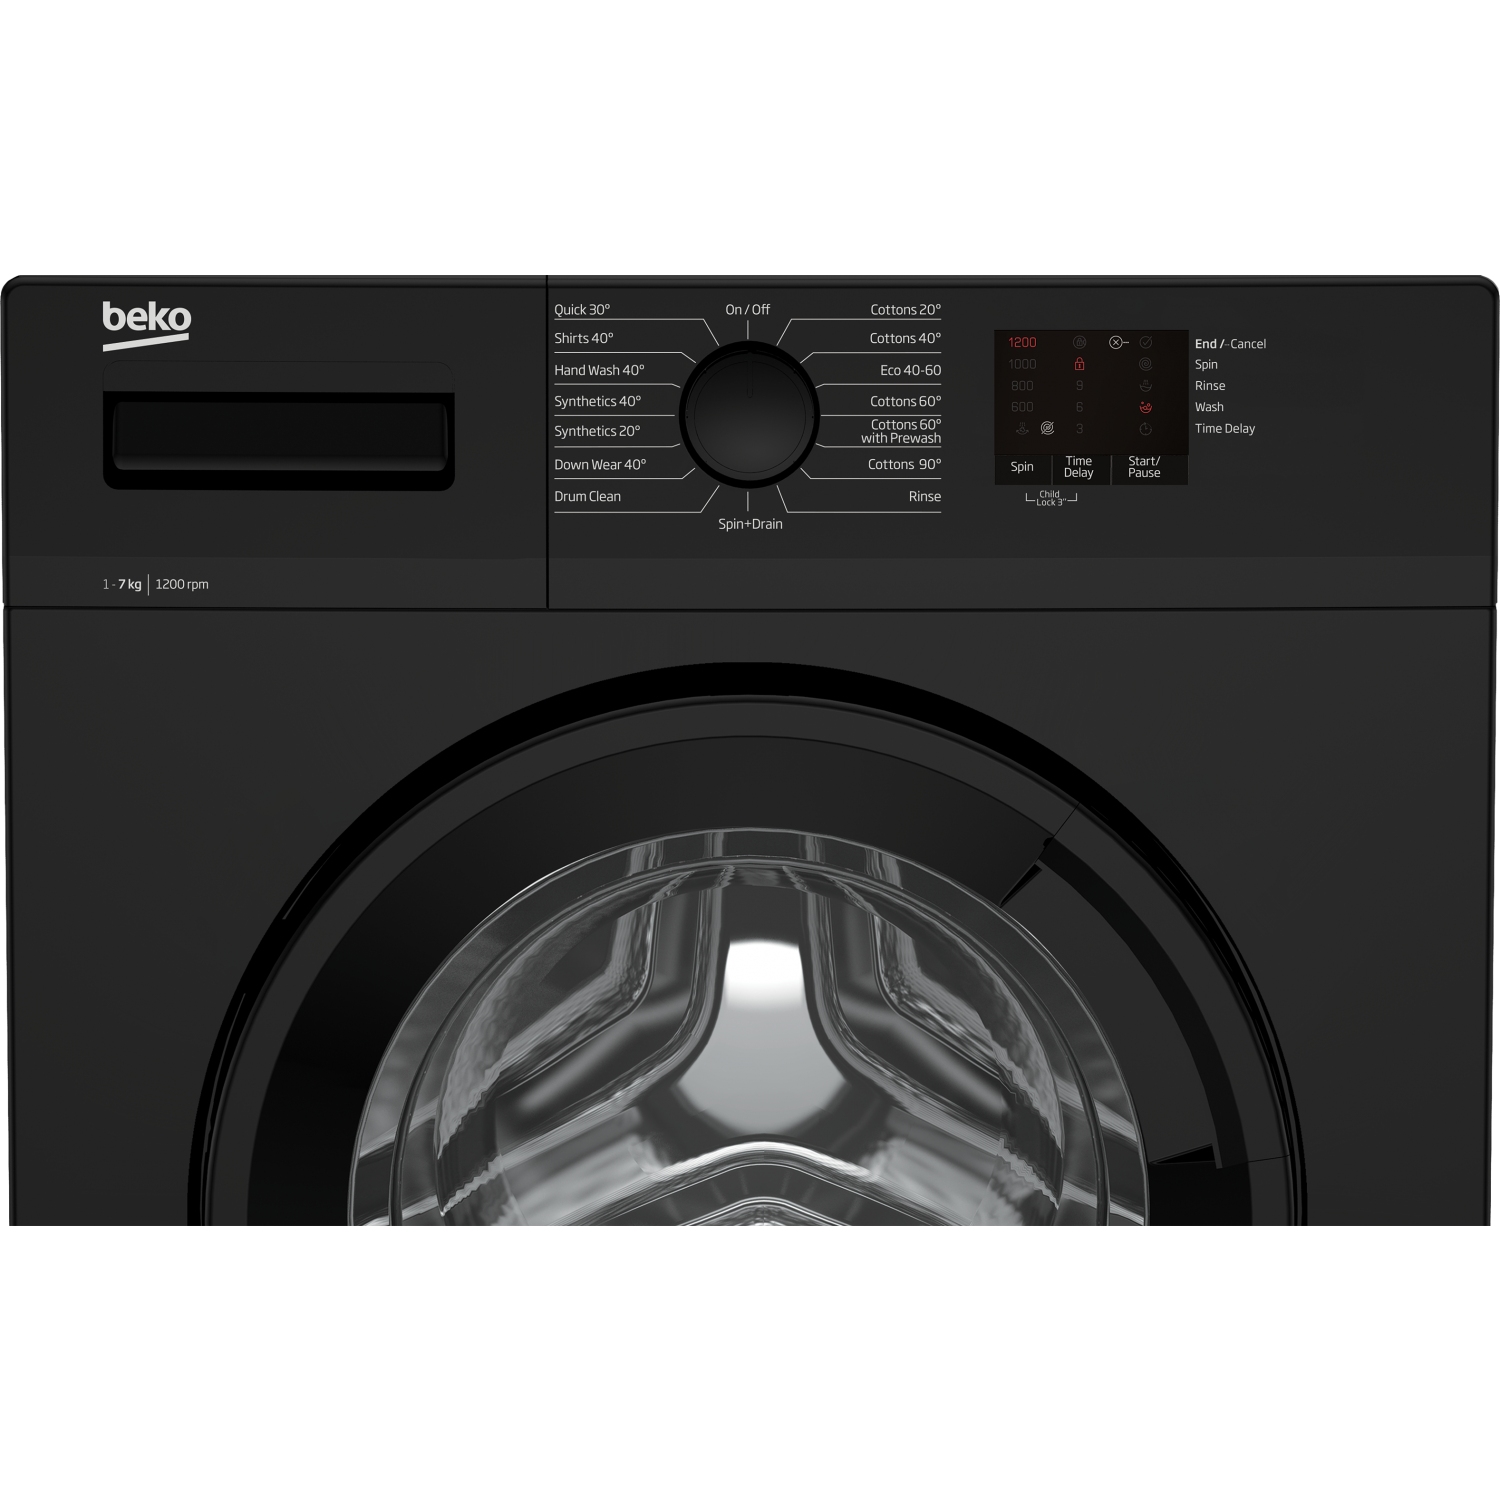 Beko WTK72042B 7kg 1200 Spin Washing Machine with Quick Programme - Black - 0